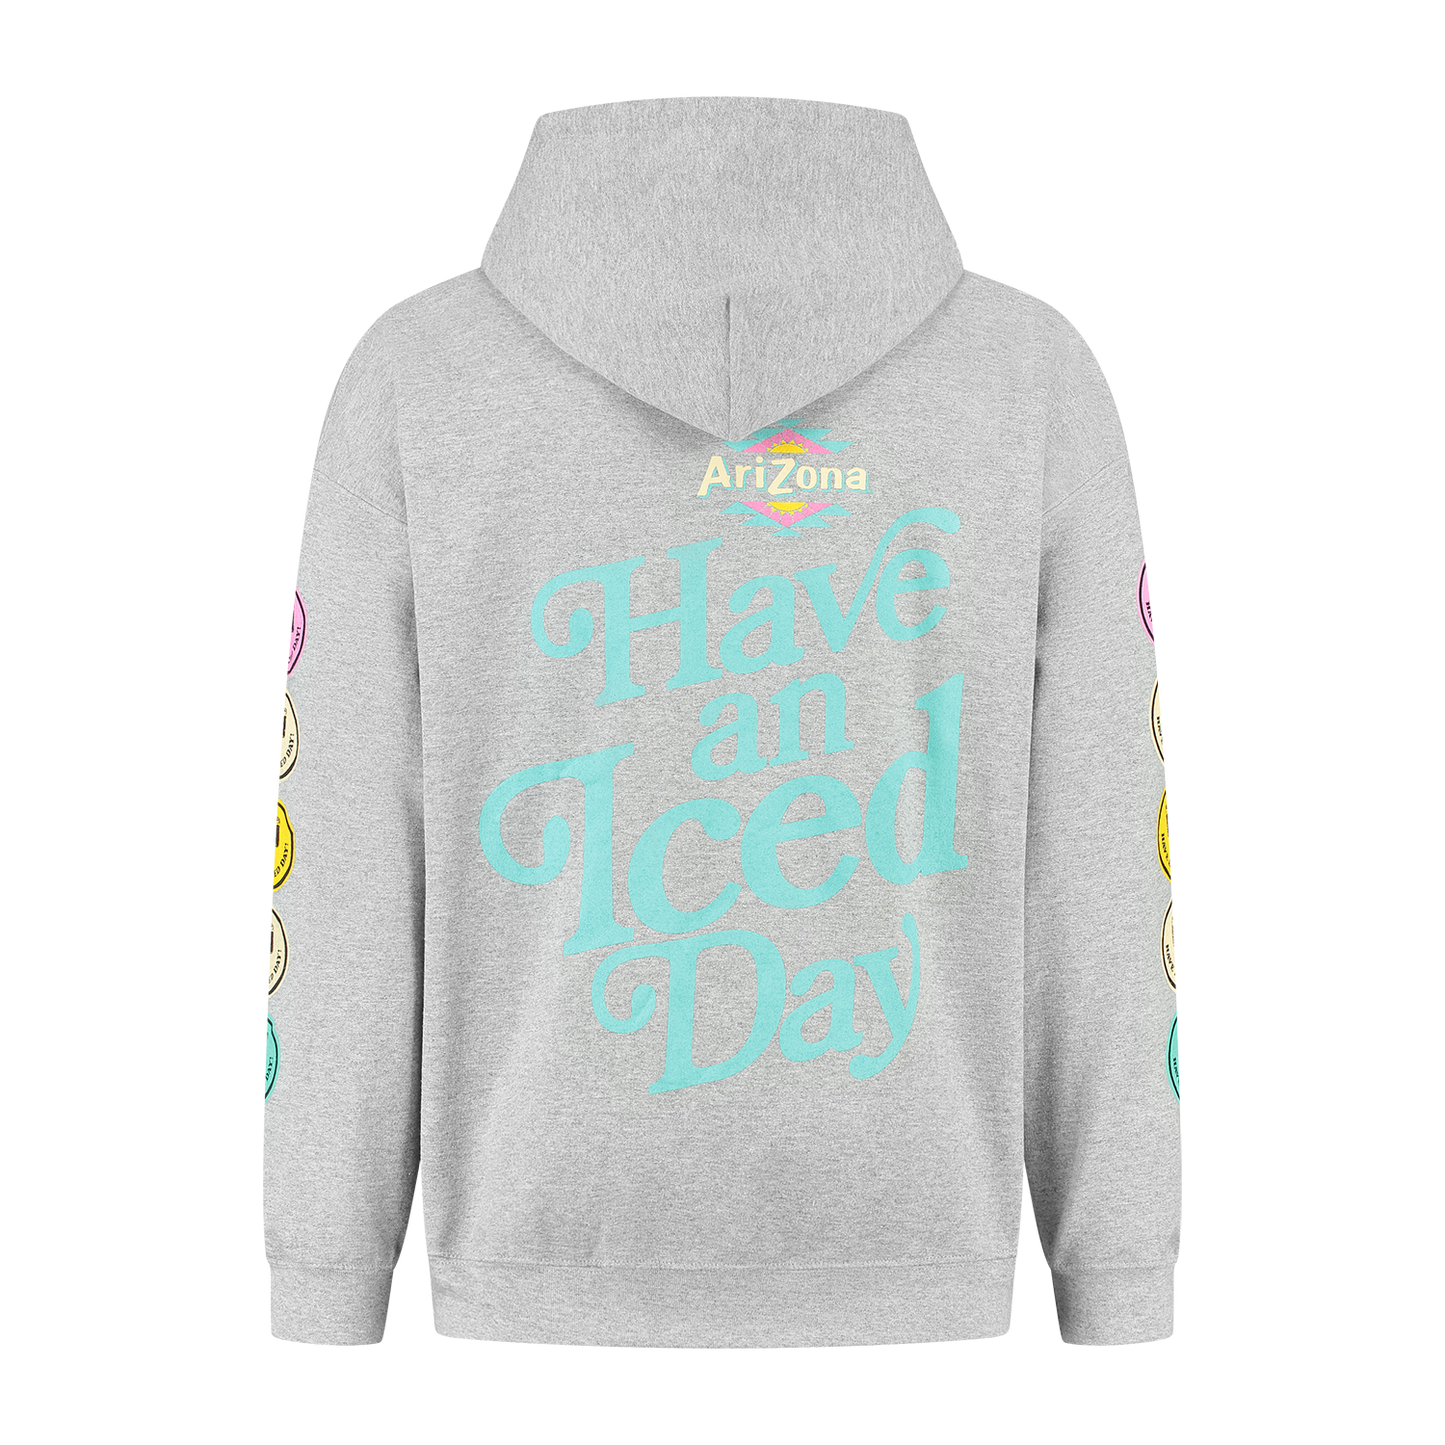 AriZona Iced Tea - grey hoodie